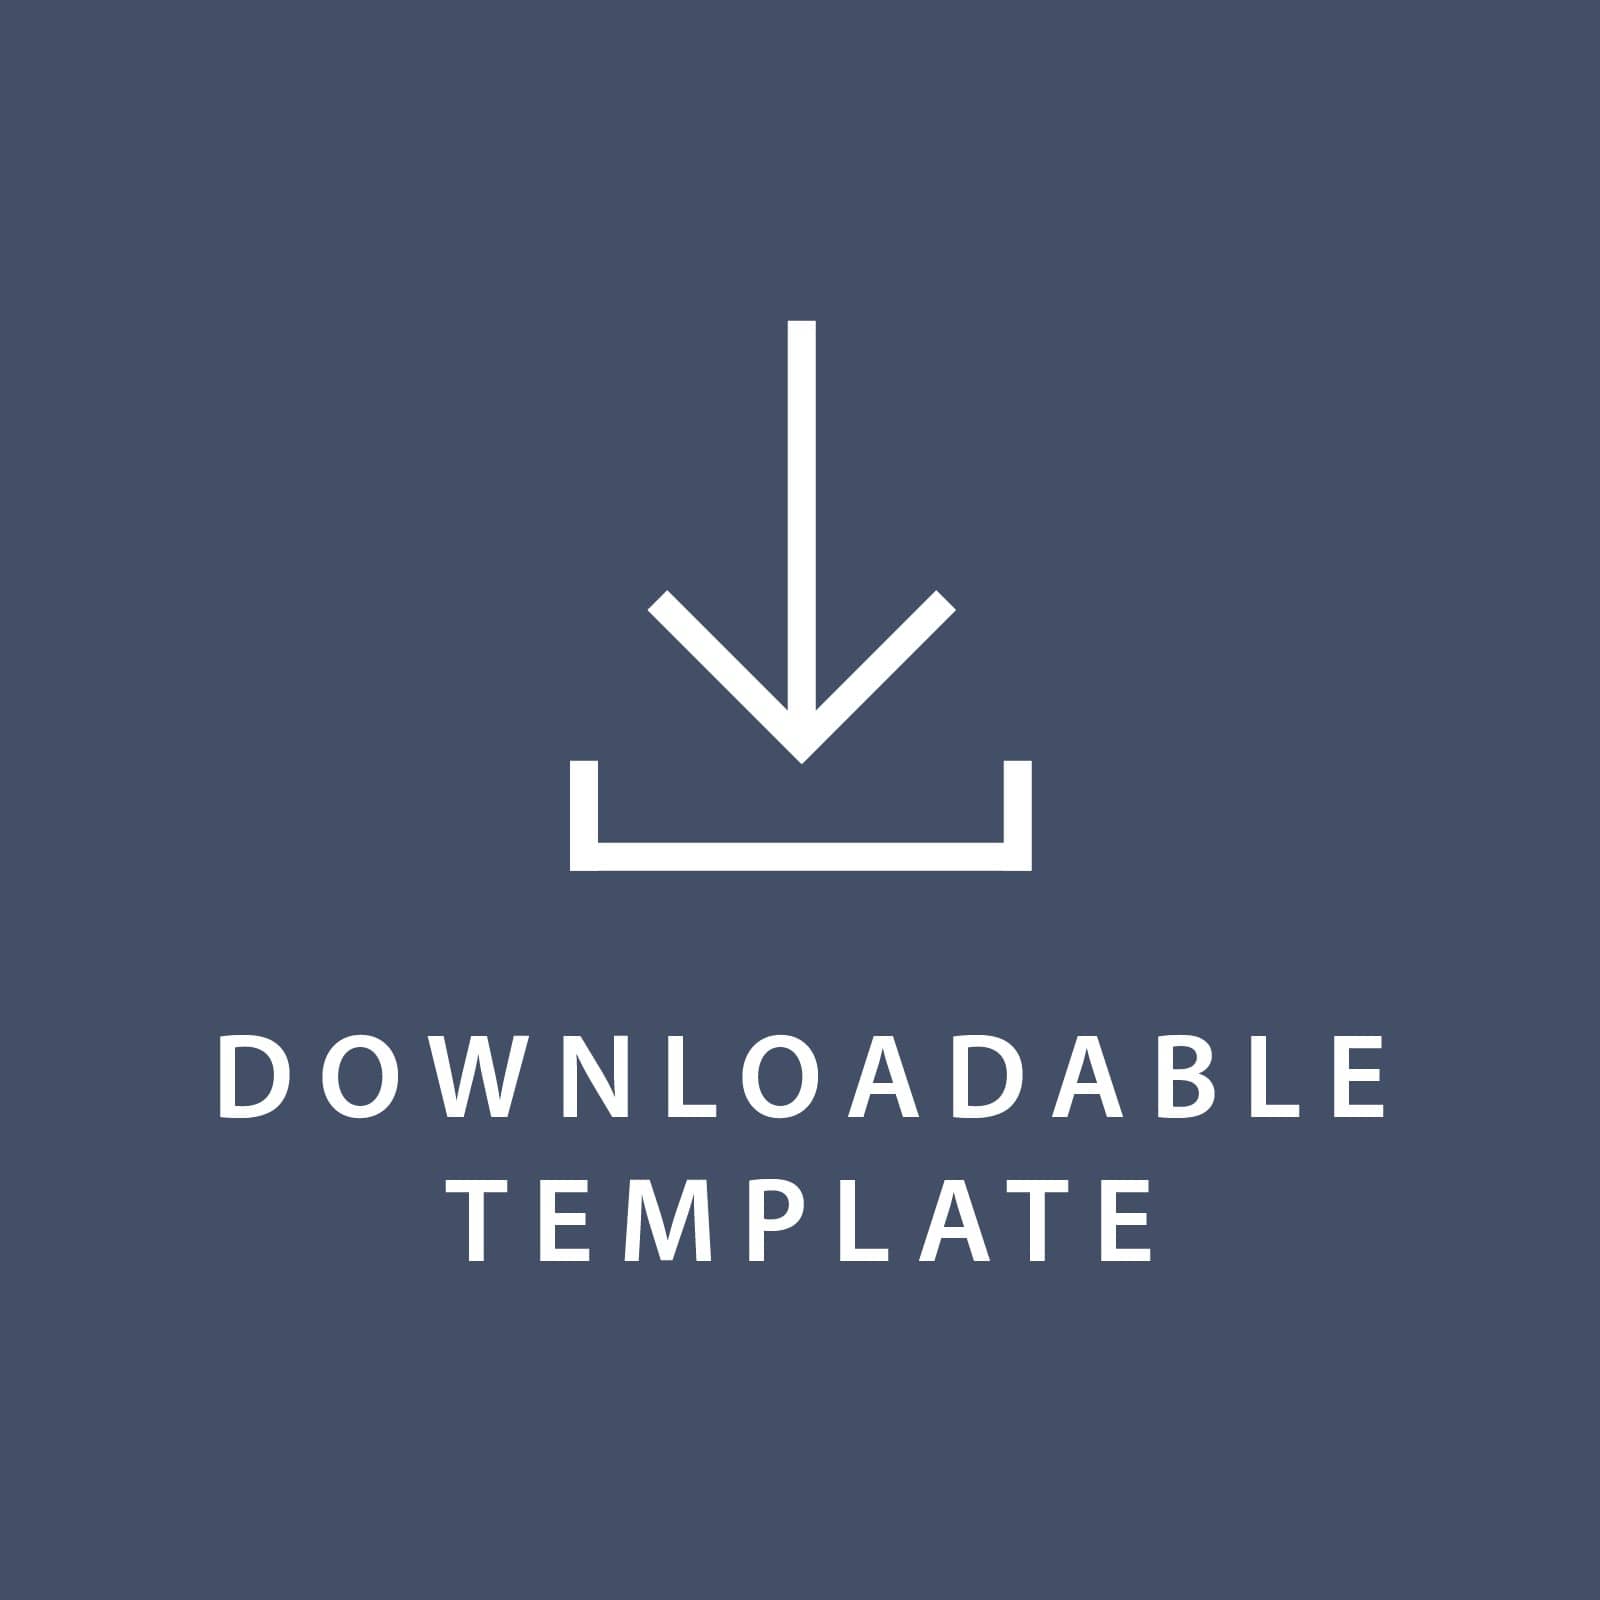 Template for 4.37 x 9 Labels Gartner Studios Template tmplt0867